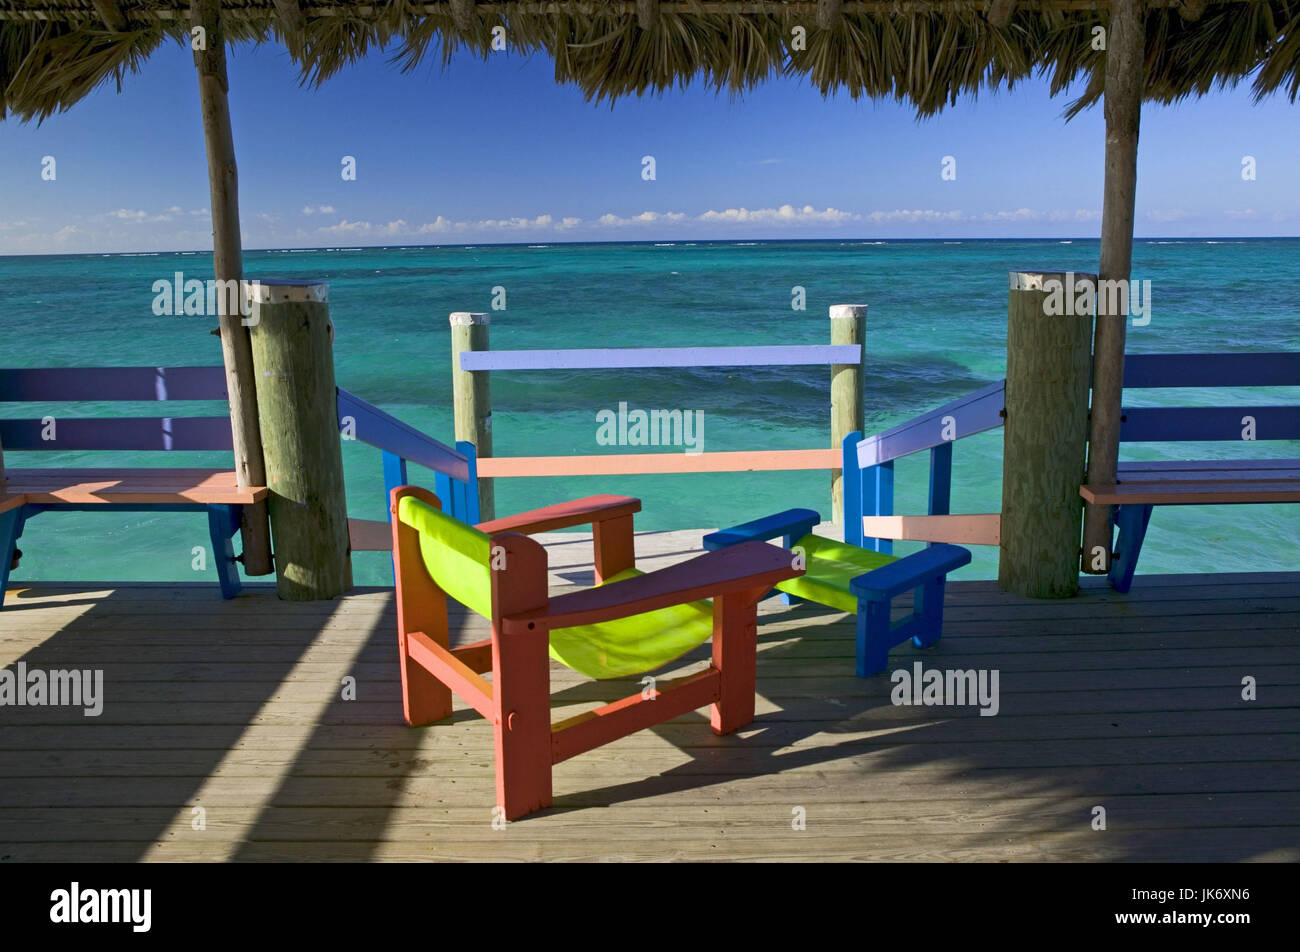 Bahamas, Ozean, Steg, Stühle, bunt, Aussicht Foto Stock